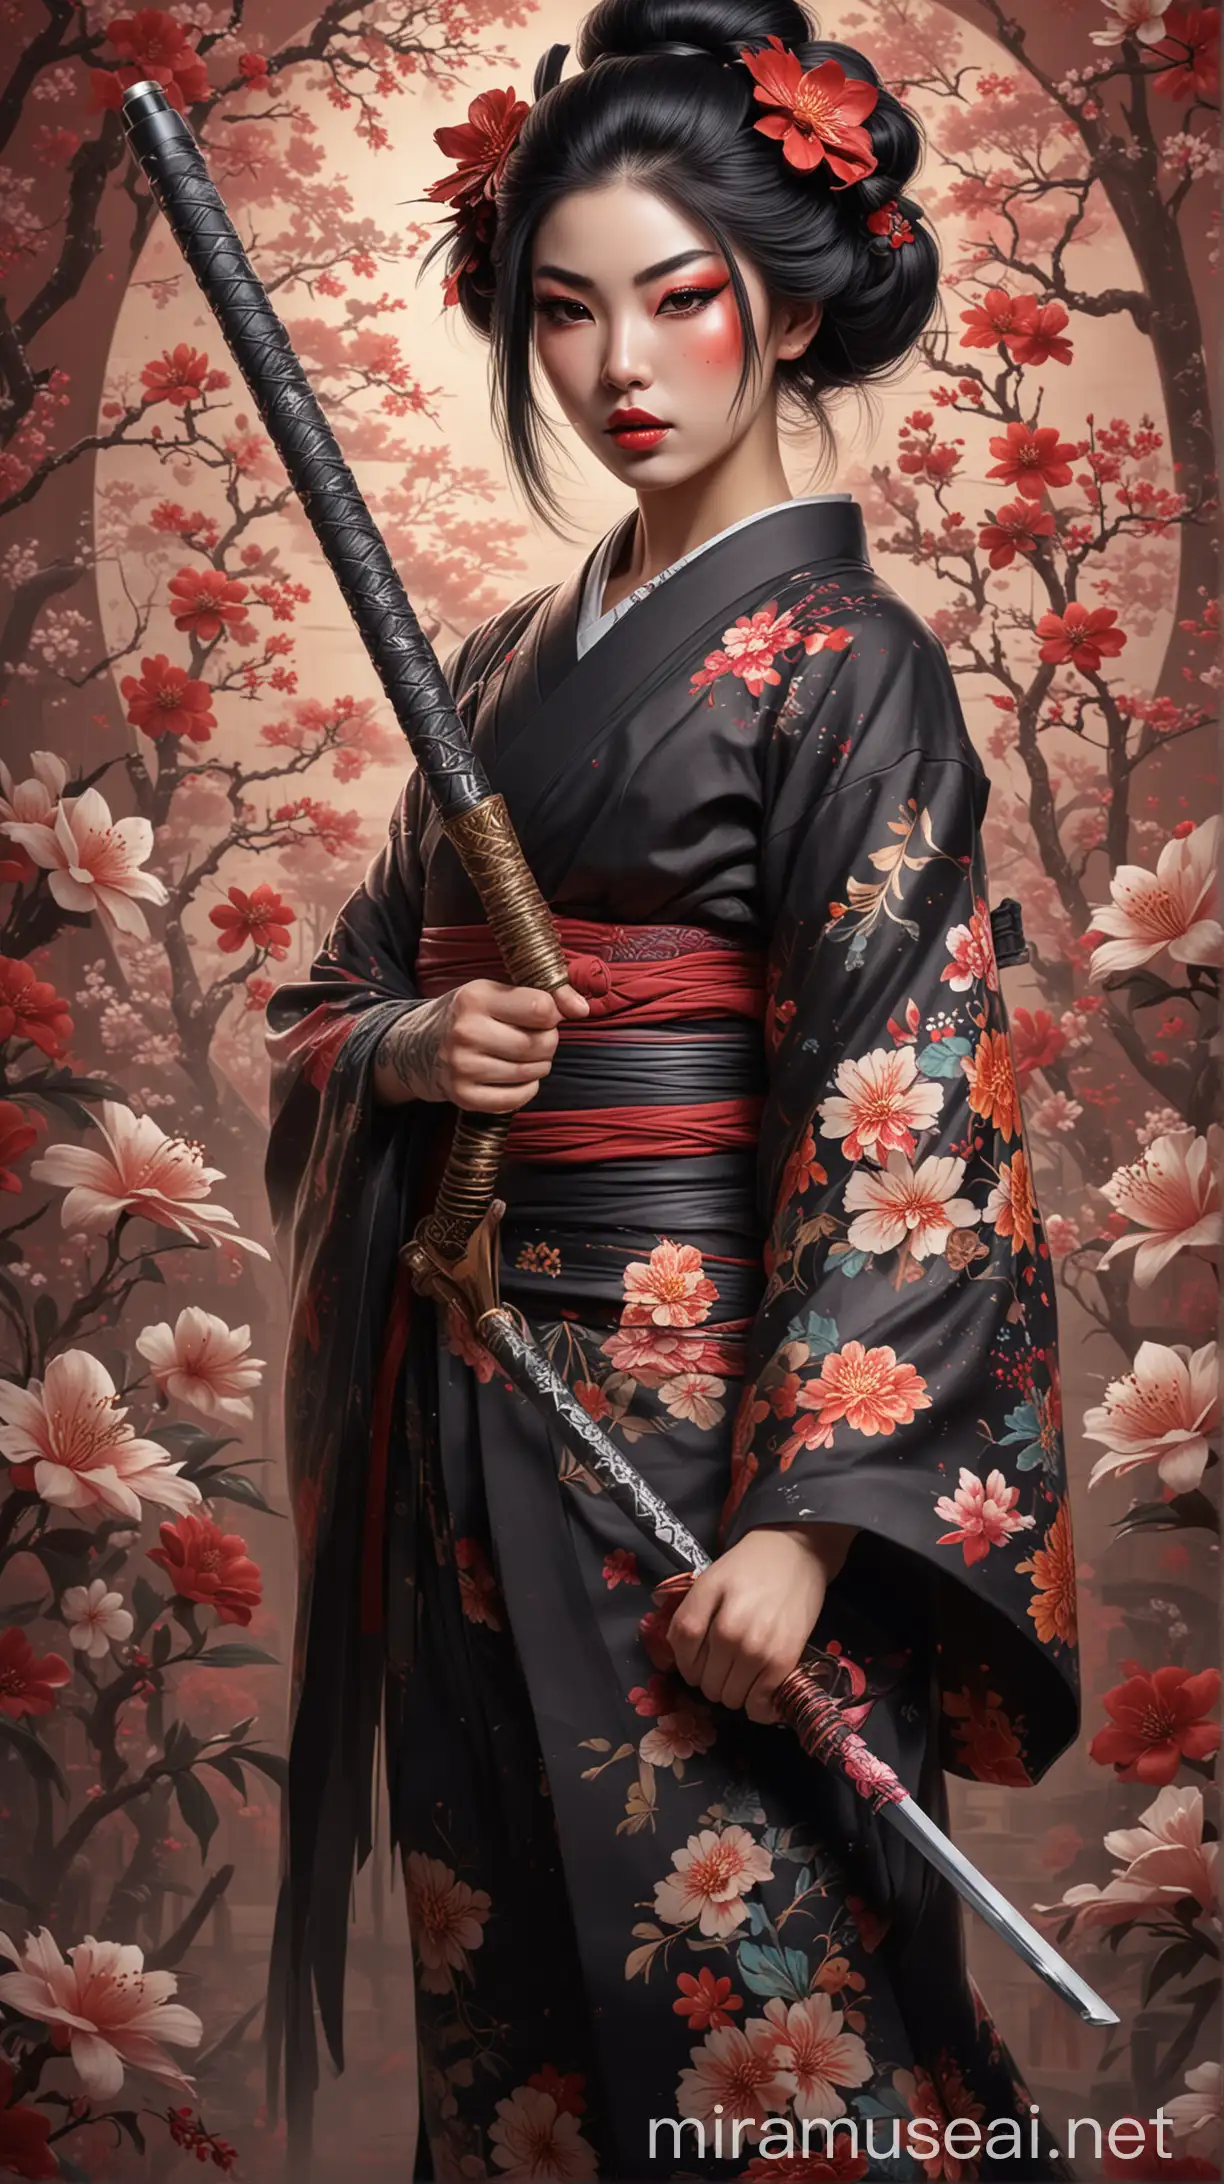 Geisha Woman with Full Body Tattoo Holding Katana Sword in Anime Fantasy Setting